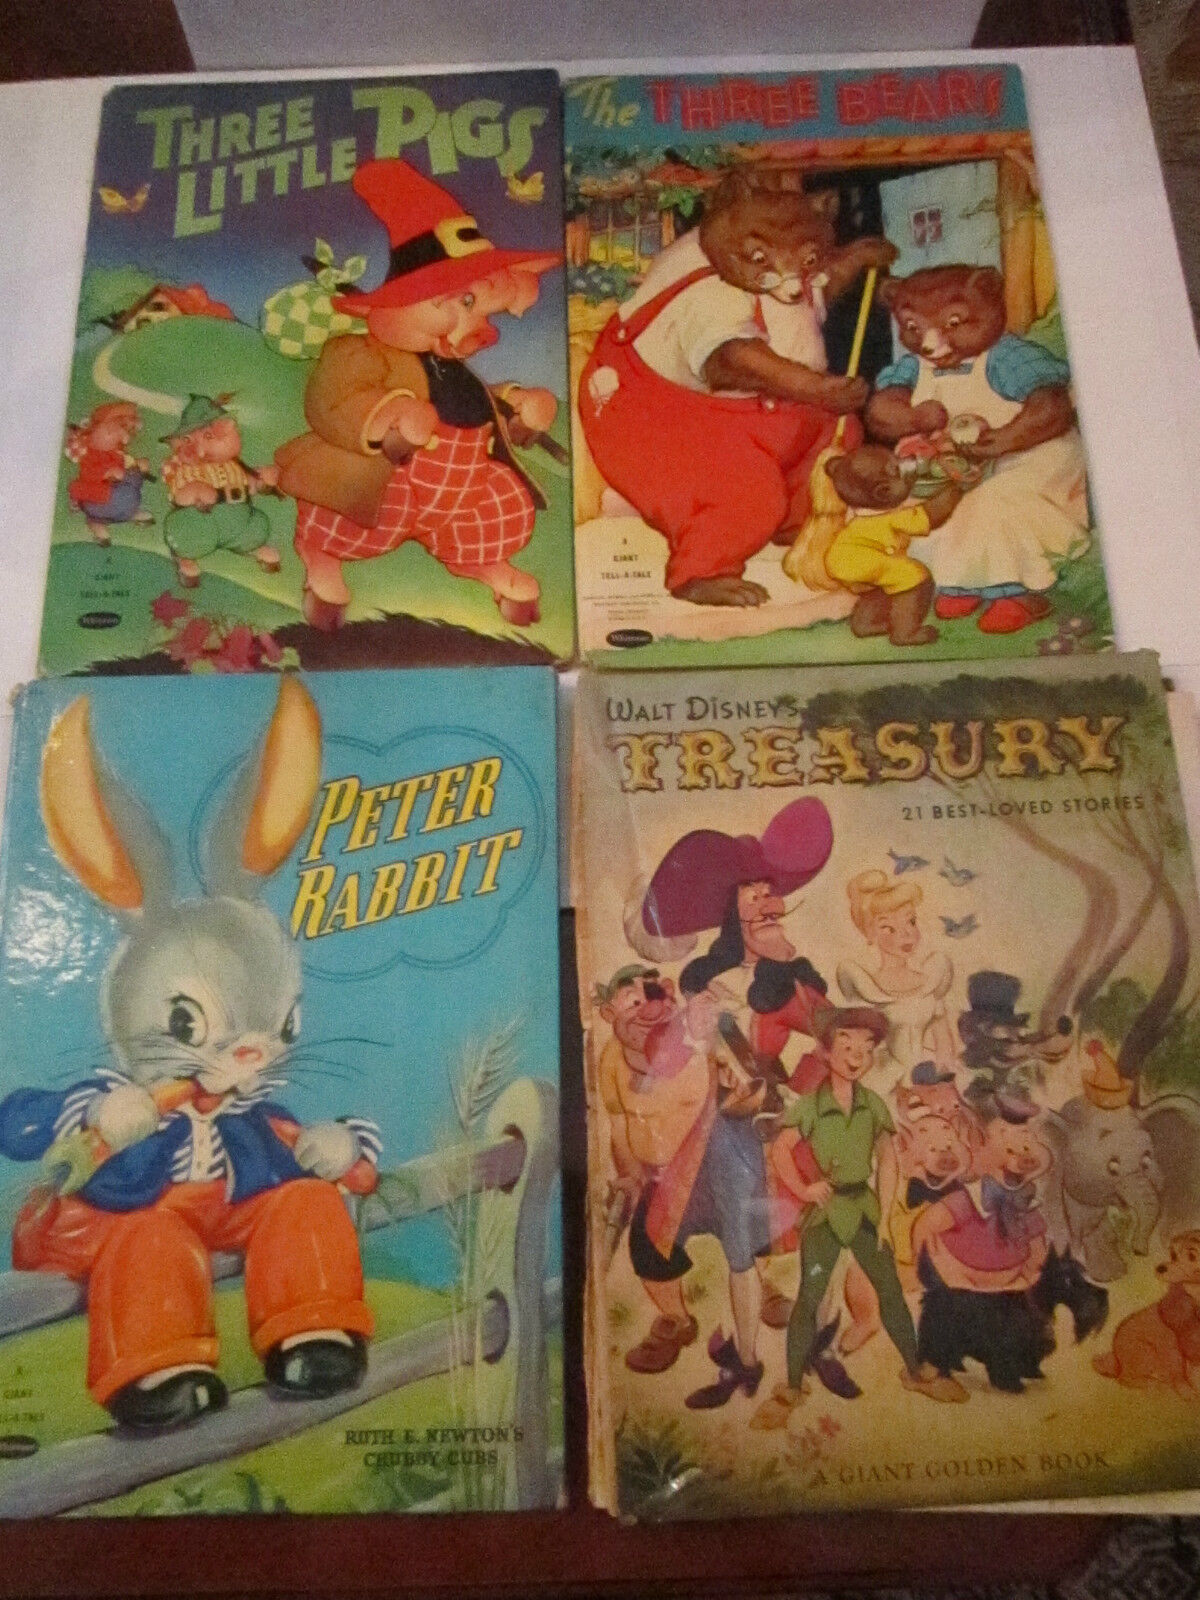 LOT OF (4) VTG BOOKS:  THREE LITTLE PIGS, THREE BEARS, PETER RABBIT ++ - TUB BBB